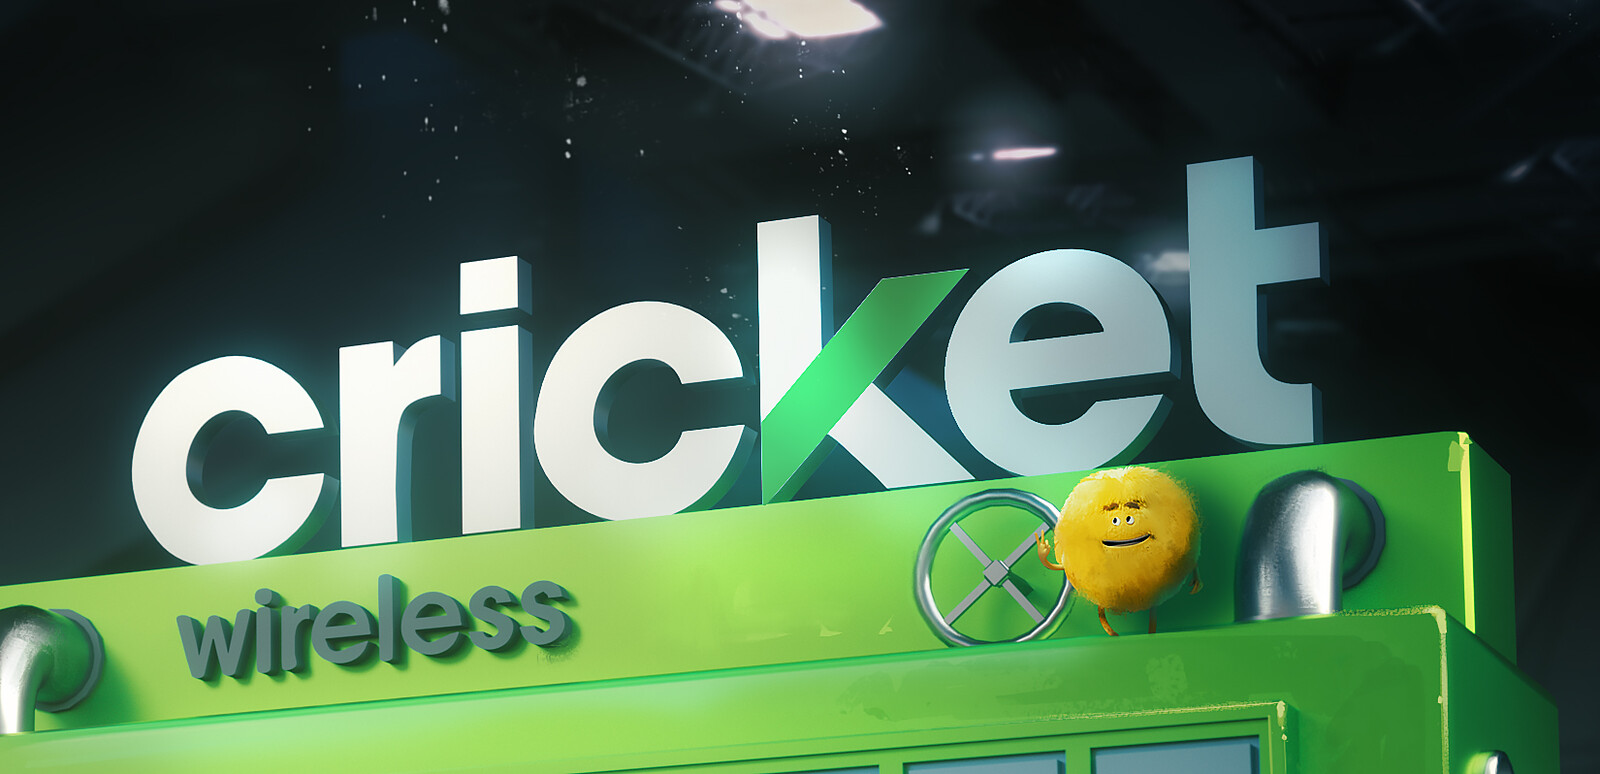 CRICKET WIRELESS 10M Smiles AD / Concept Art 2